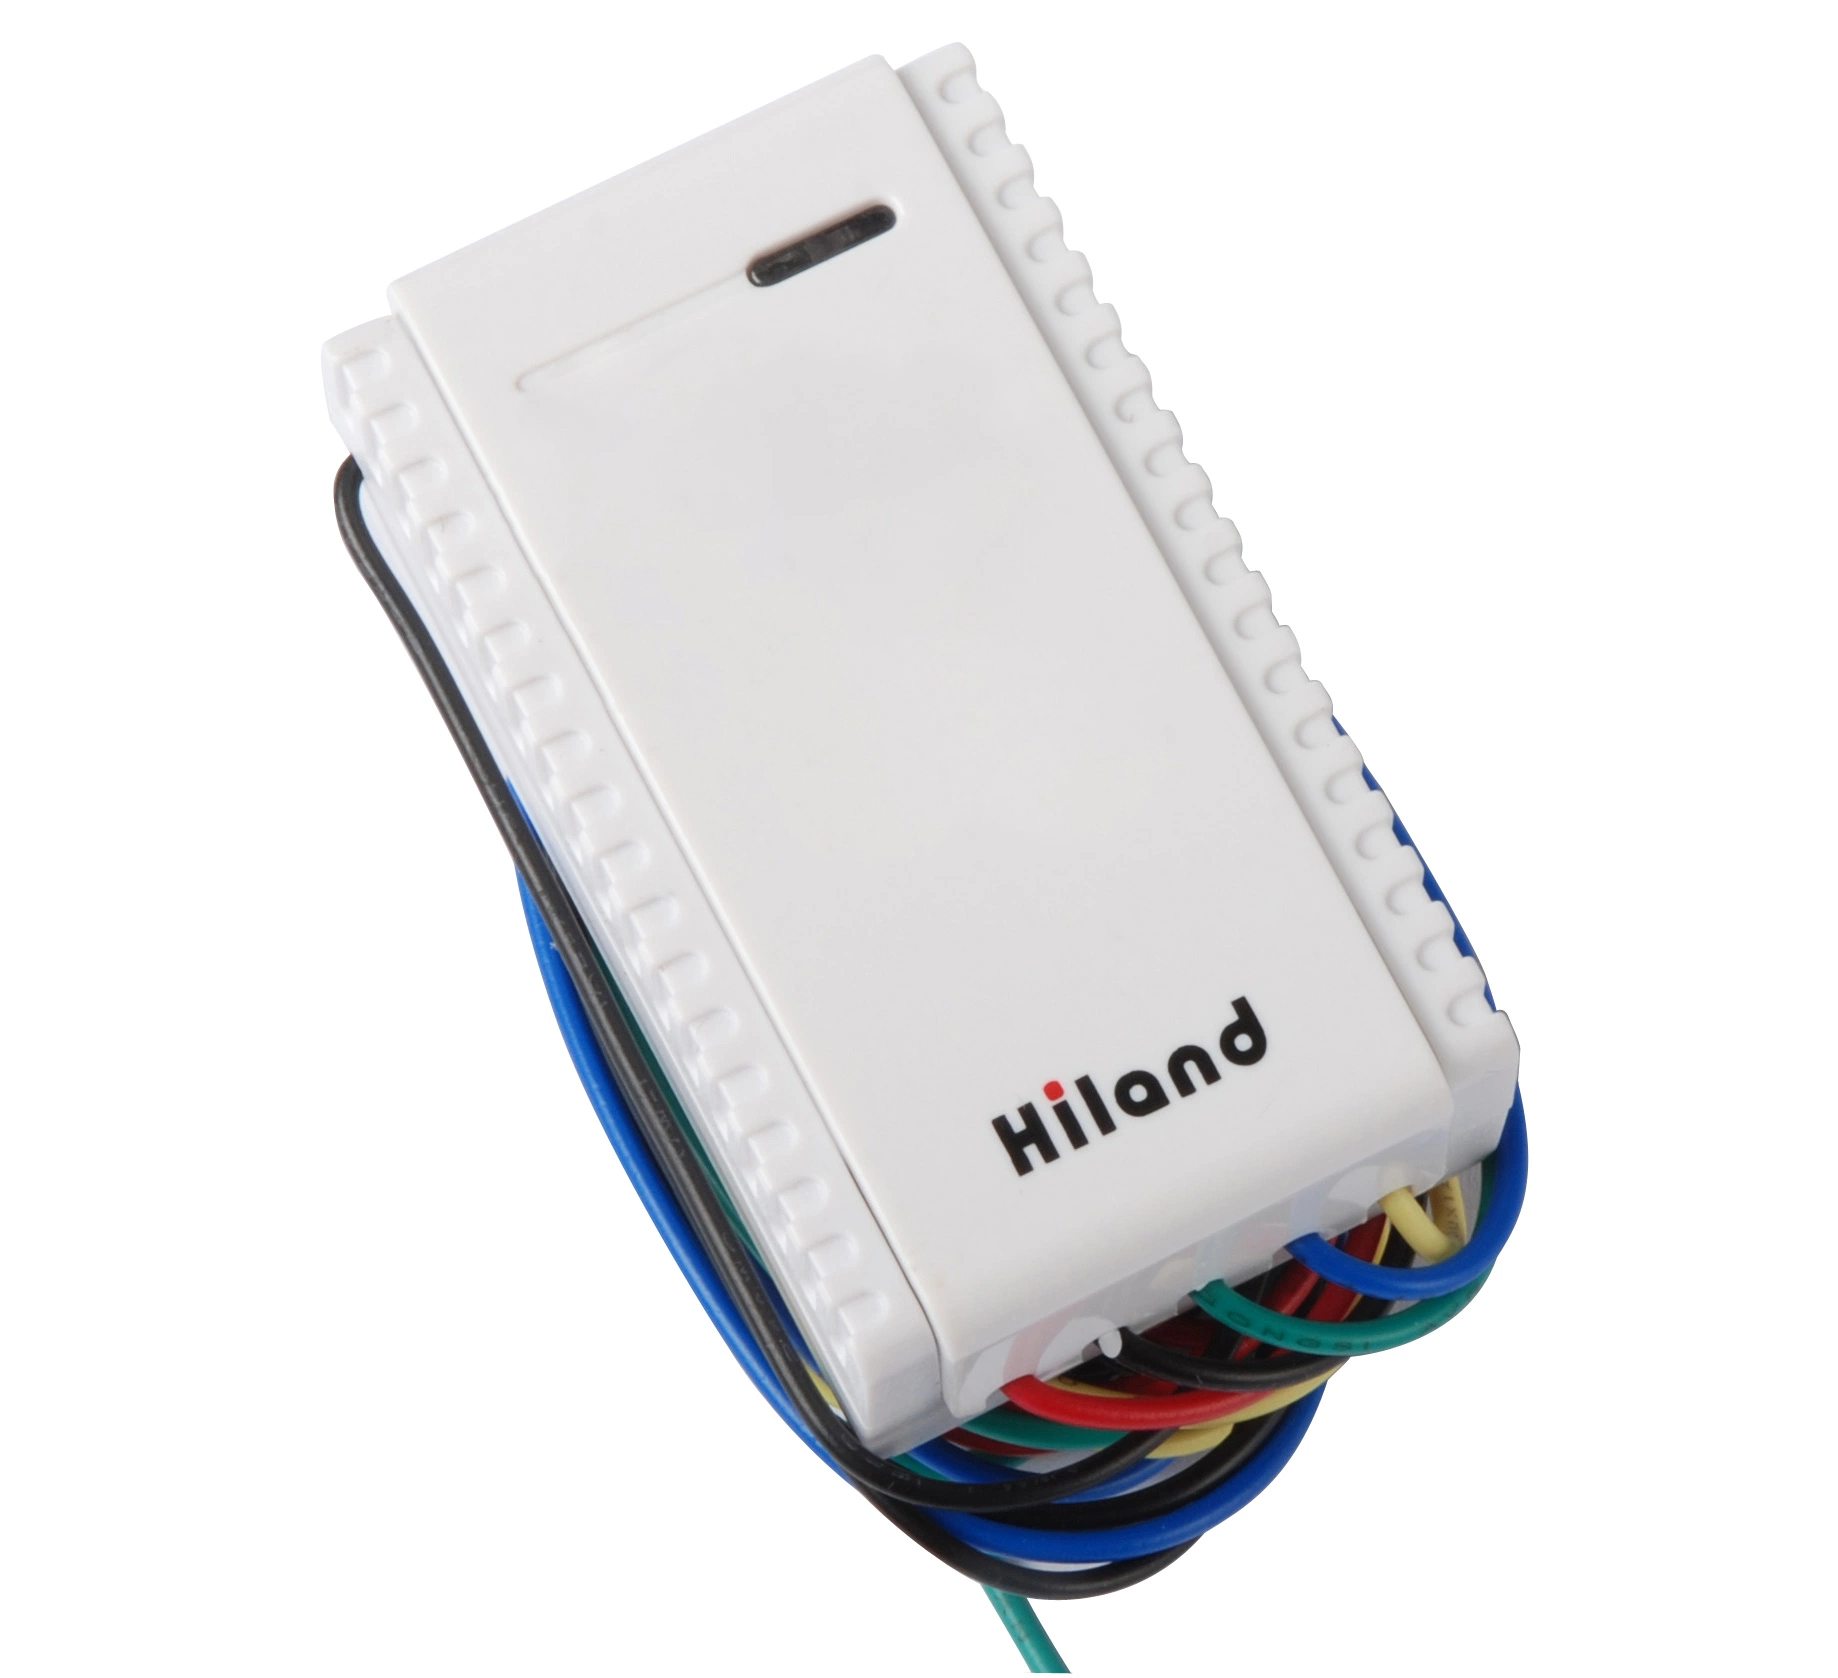 Hiland R5115 AC DC 12V 24V Universal Sliding Gate Opener Receiver with Fixed Code